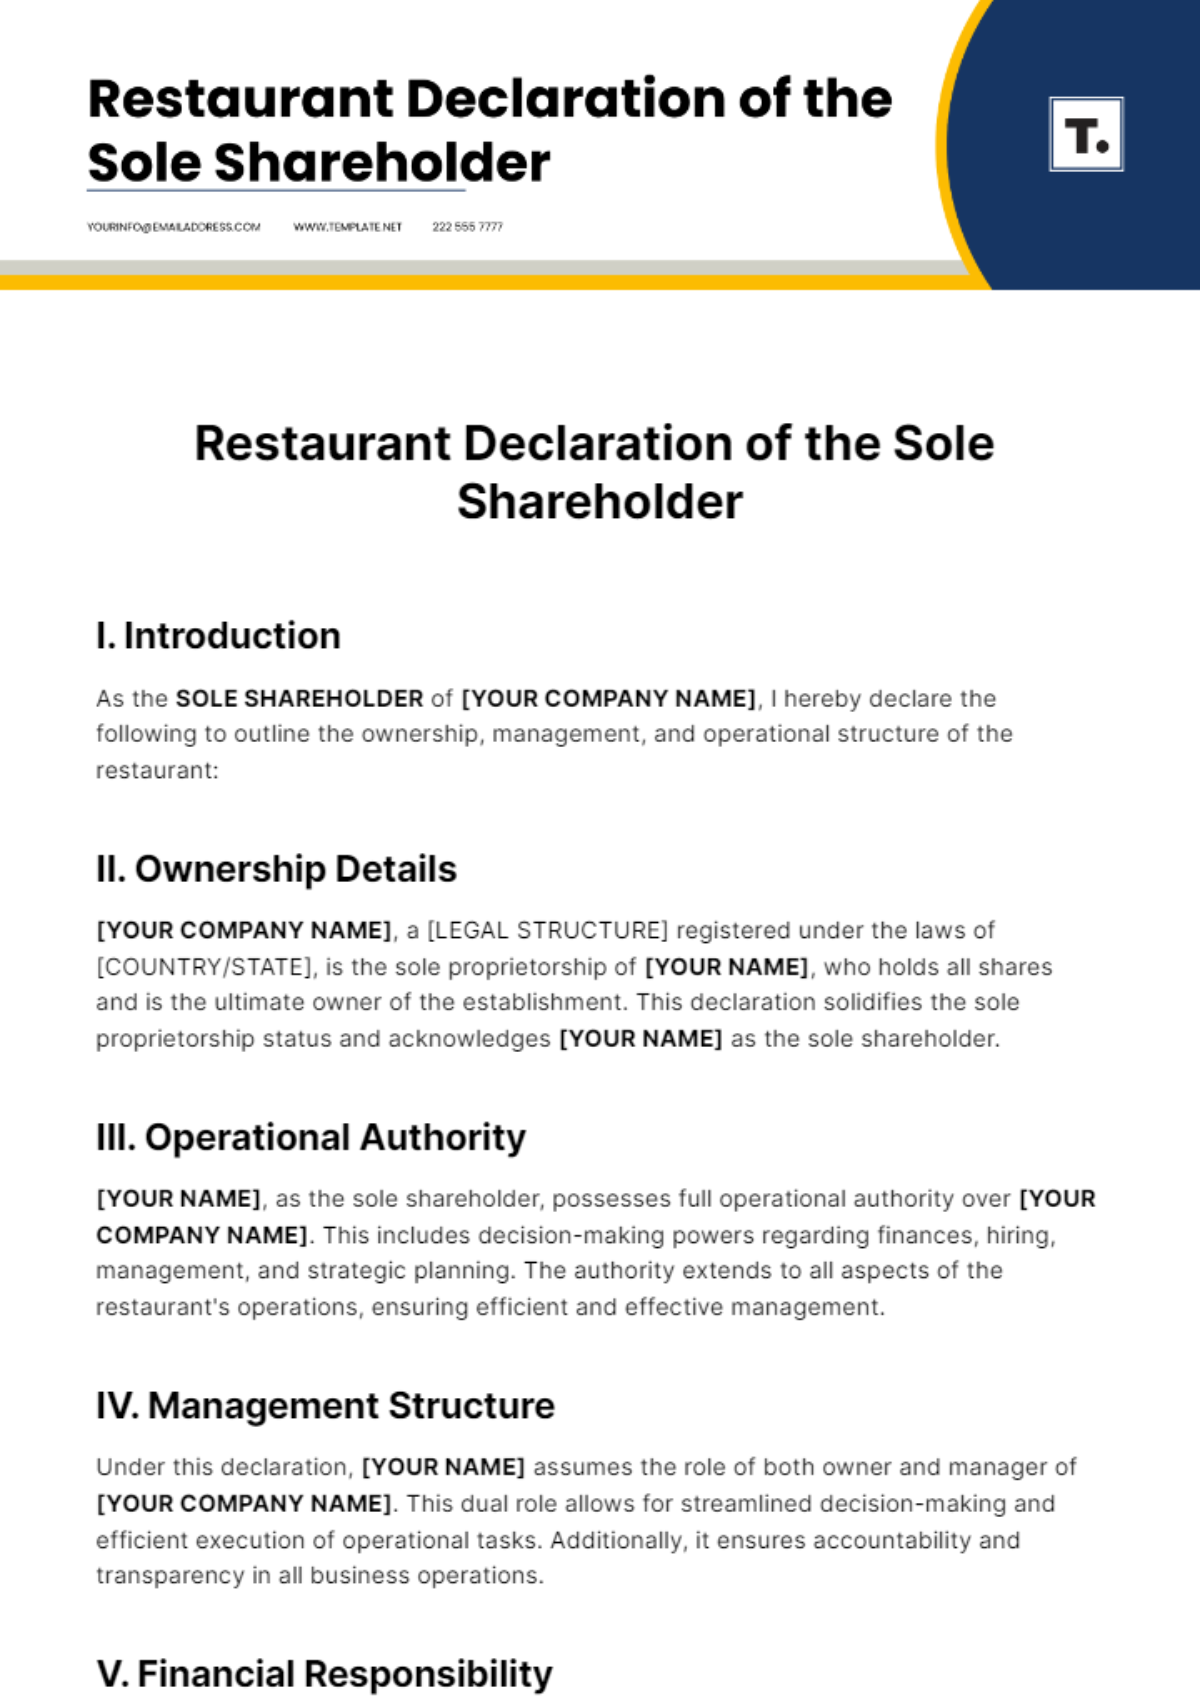 Restaurant Declaration of the Sole Shareholder Template